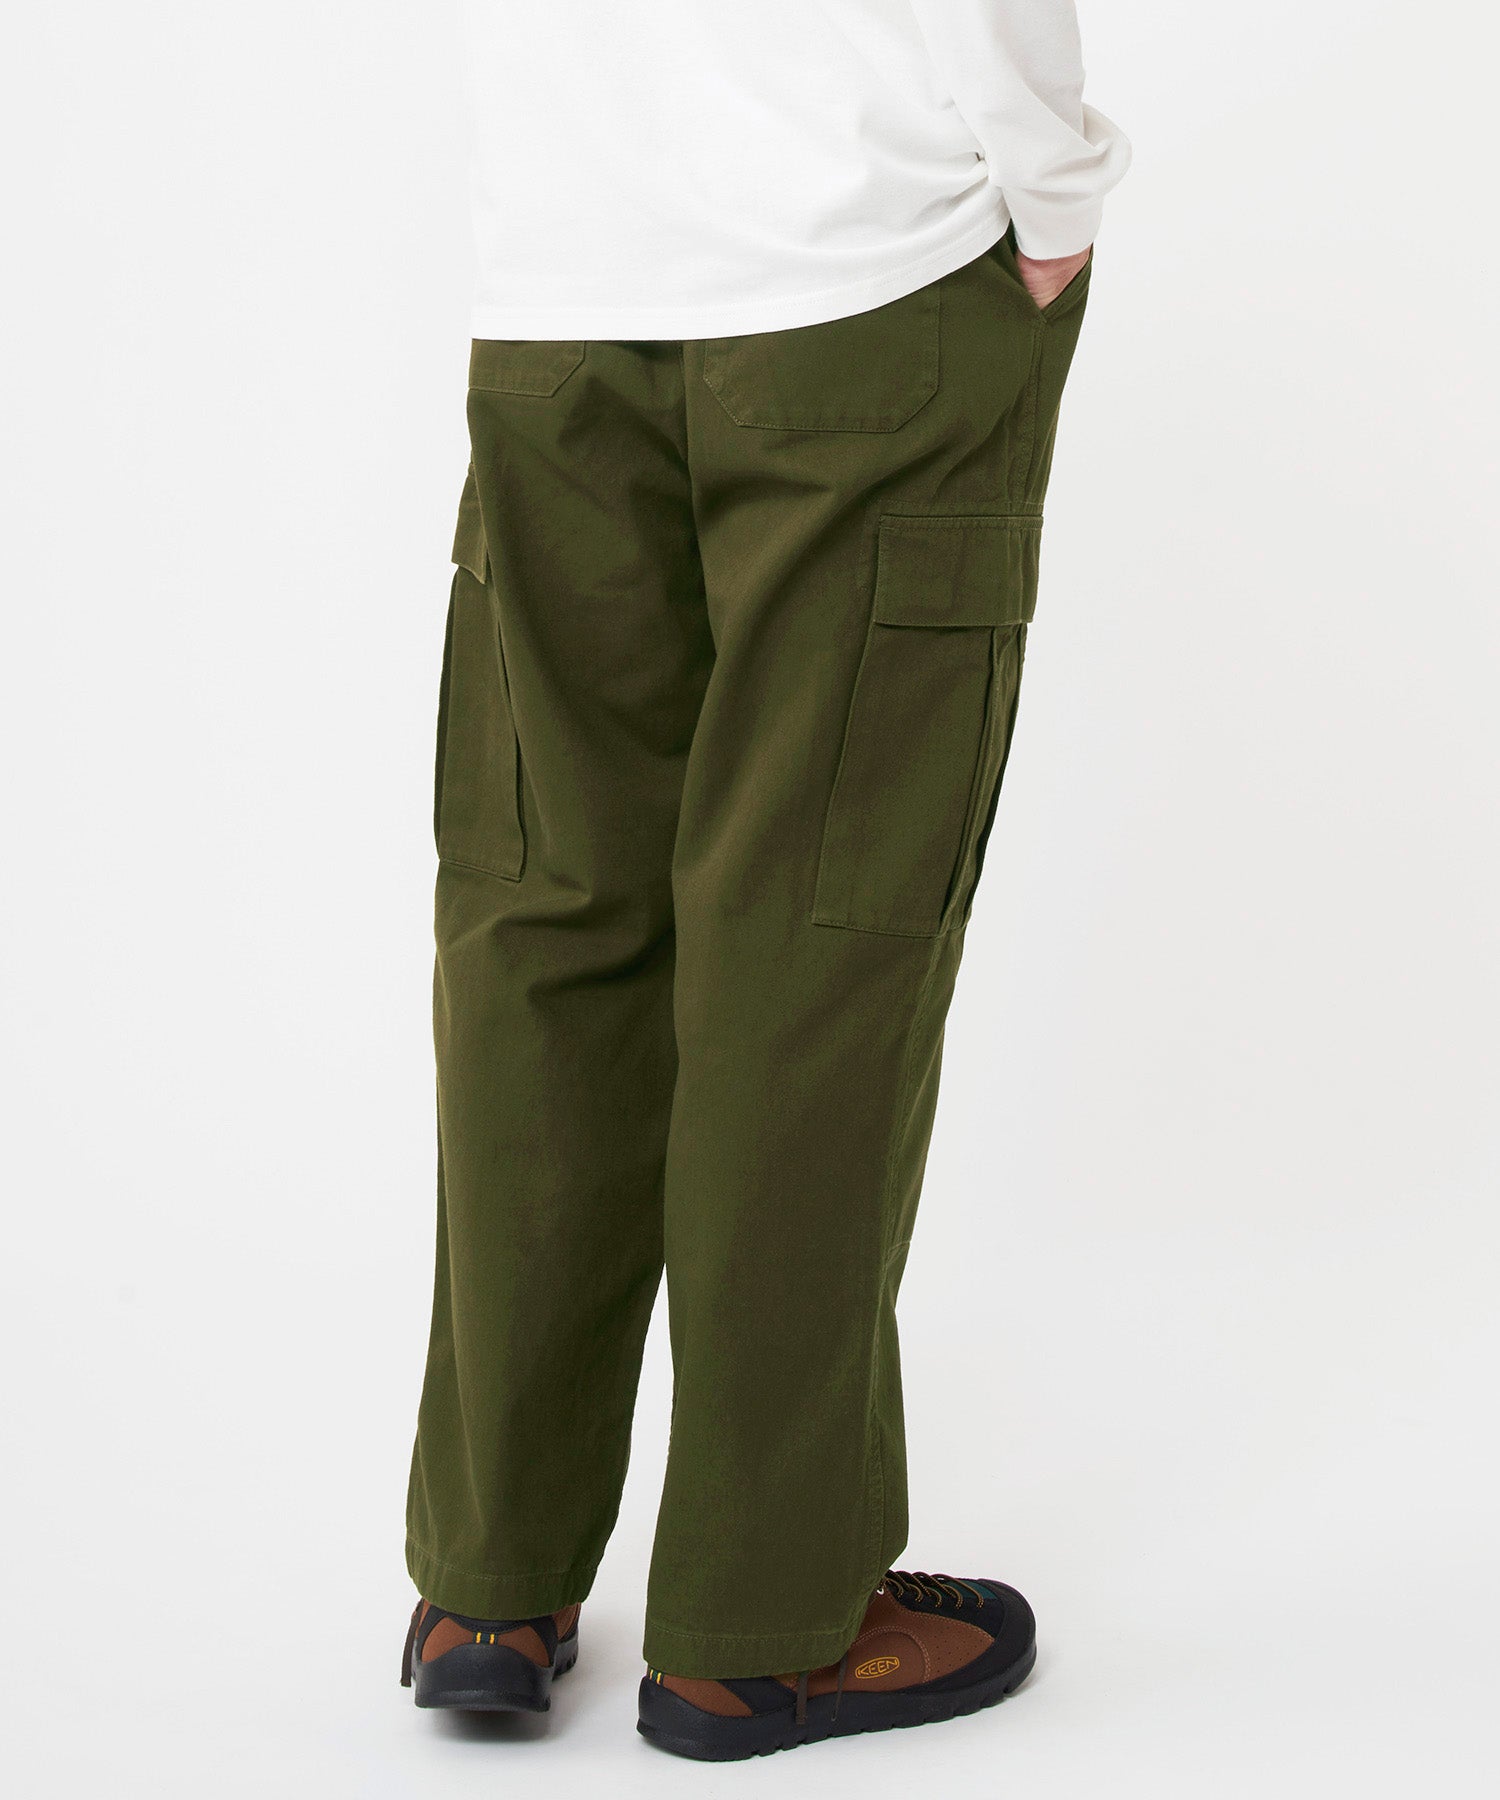 Big Cargo Pocket Pants | Cargo pants men, Green cargo pants, Cargo pants  outfit men